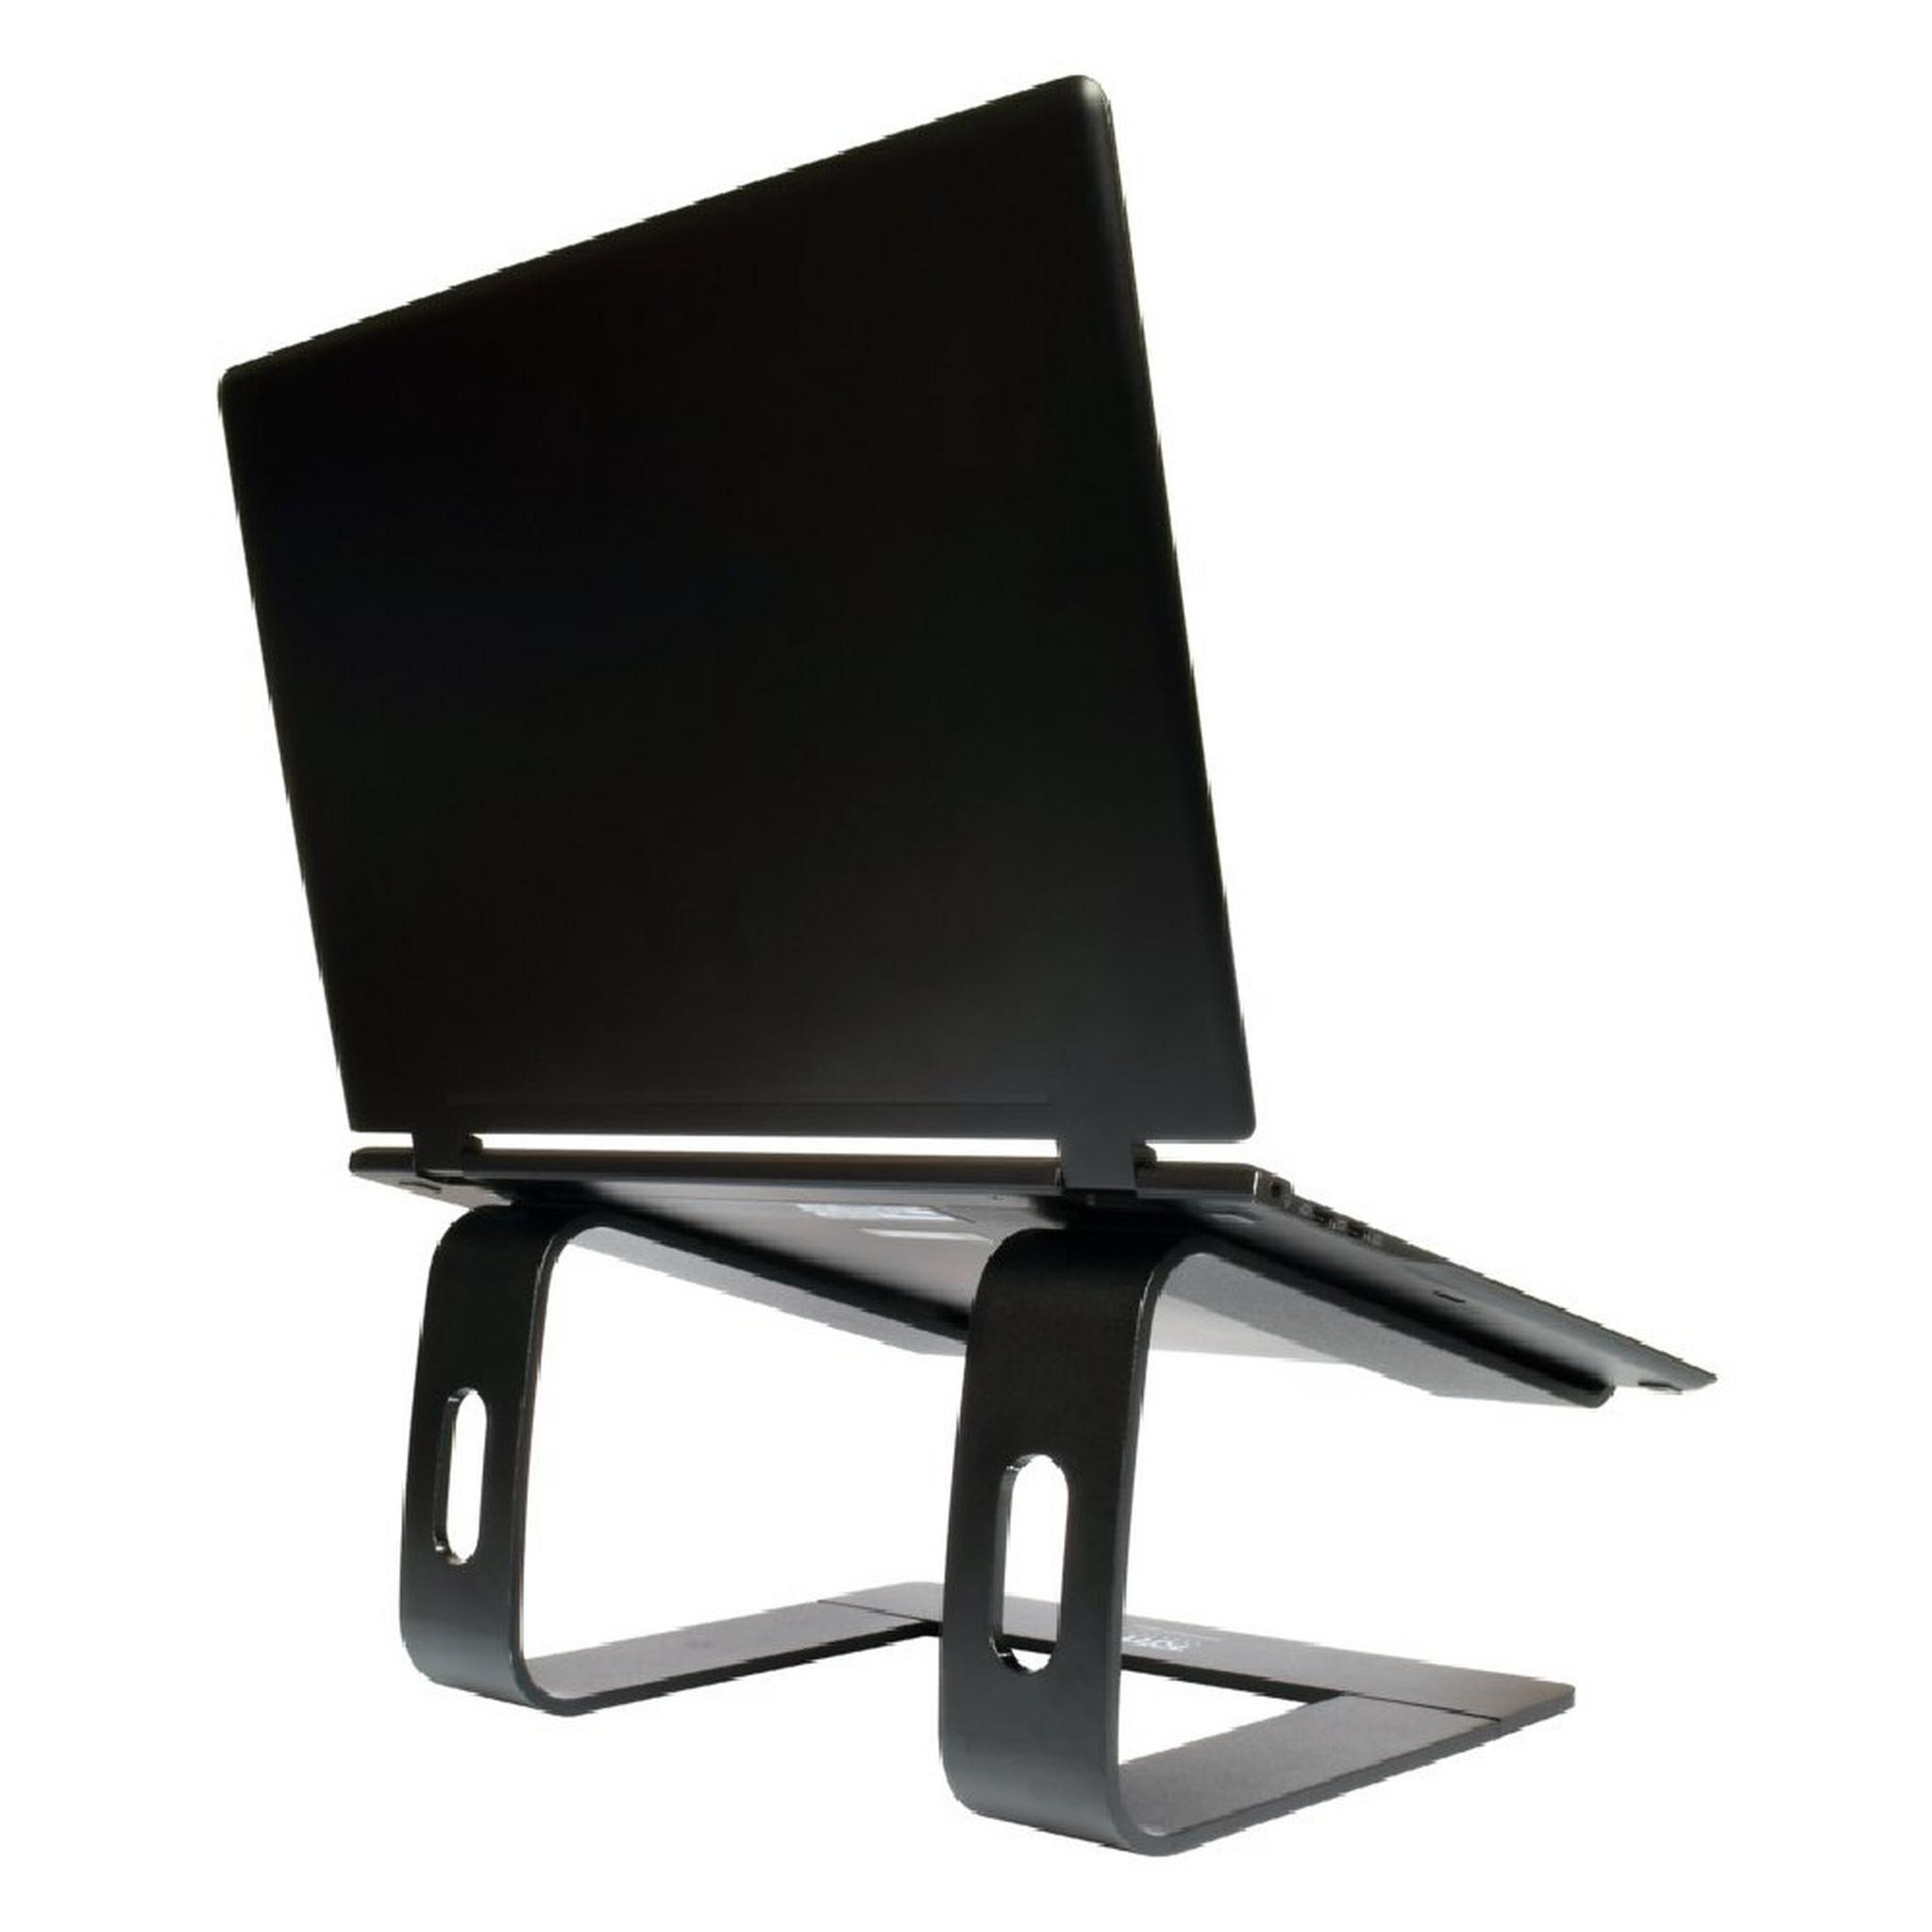 Port PC Aluminum 15.6-inch Laptop Stand